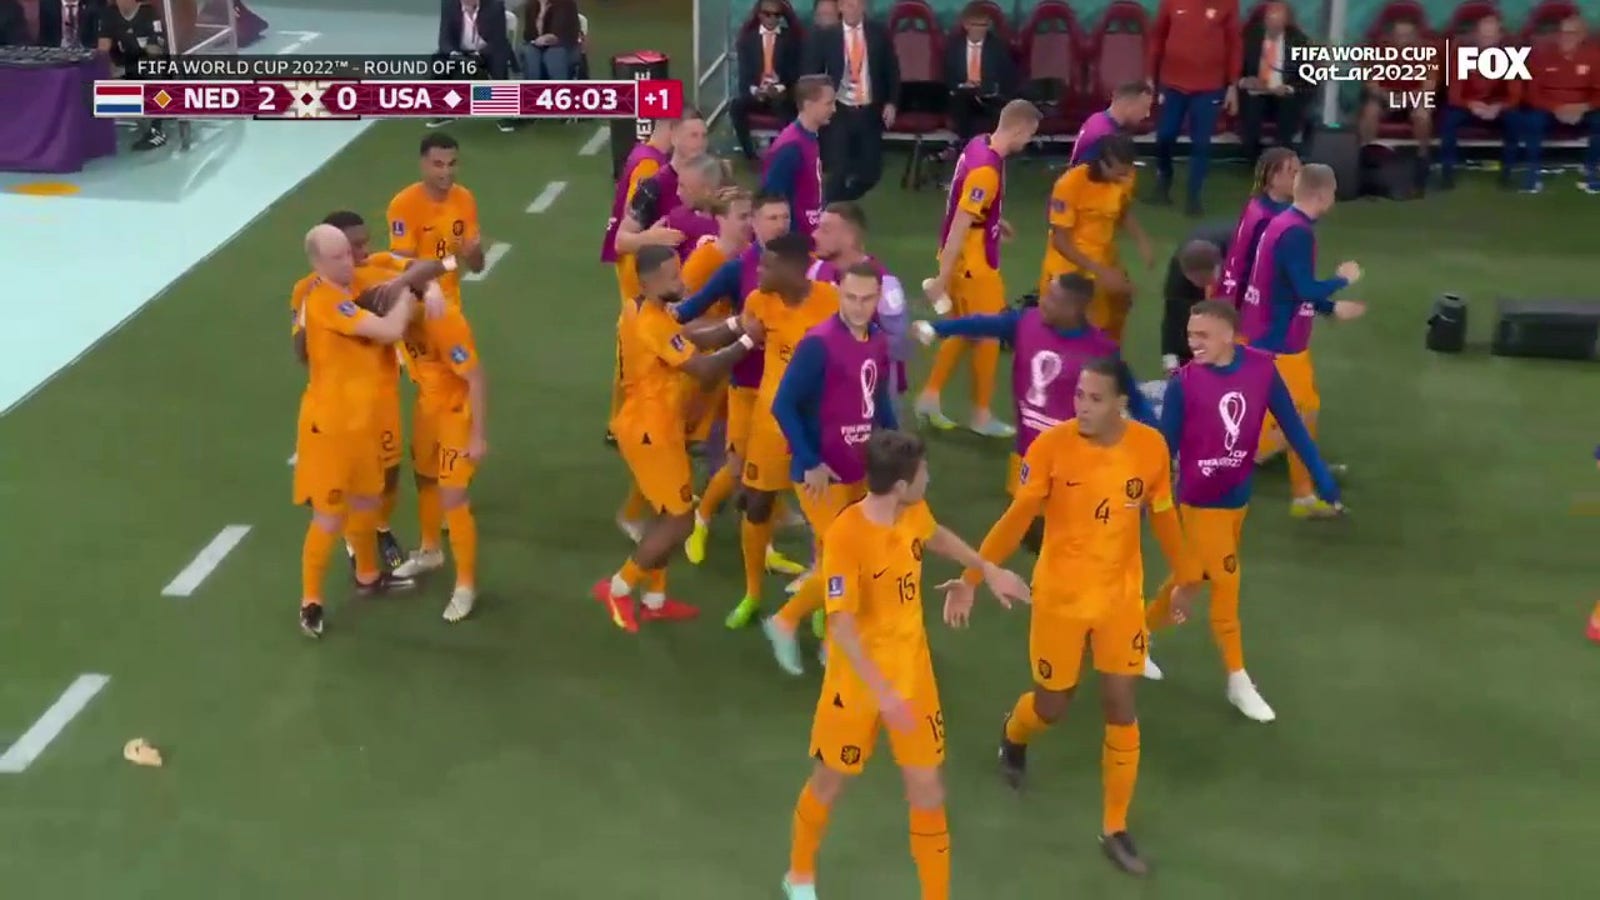 Netherlands' Daley Blind scores goal vs. USA in 45+1' 